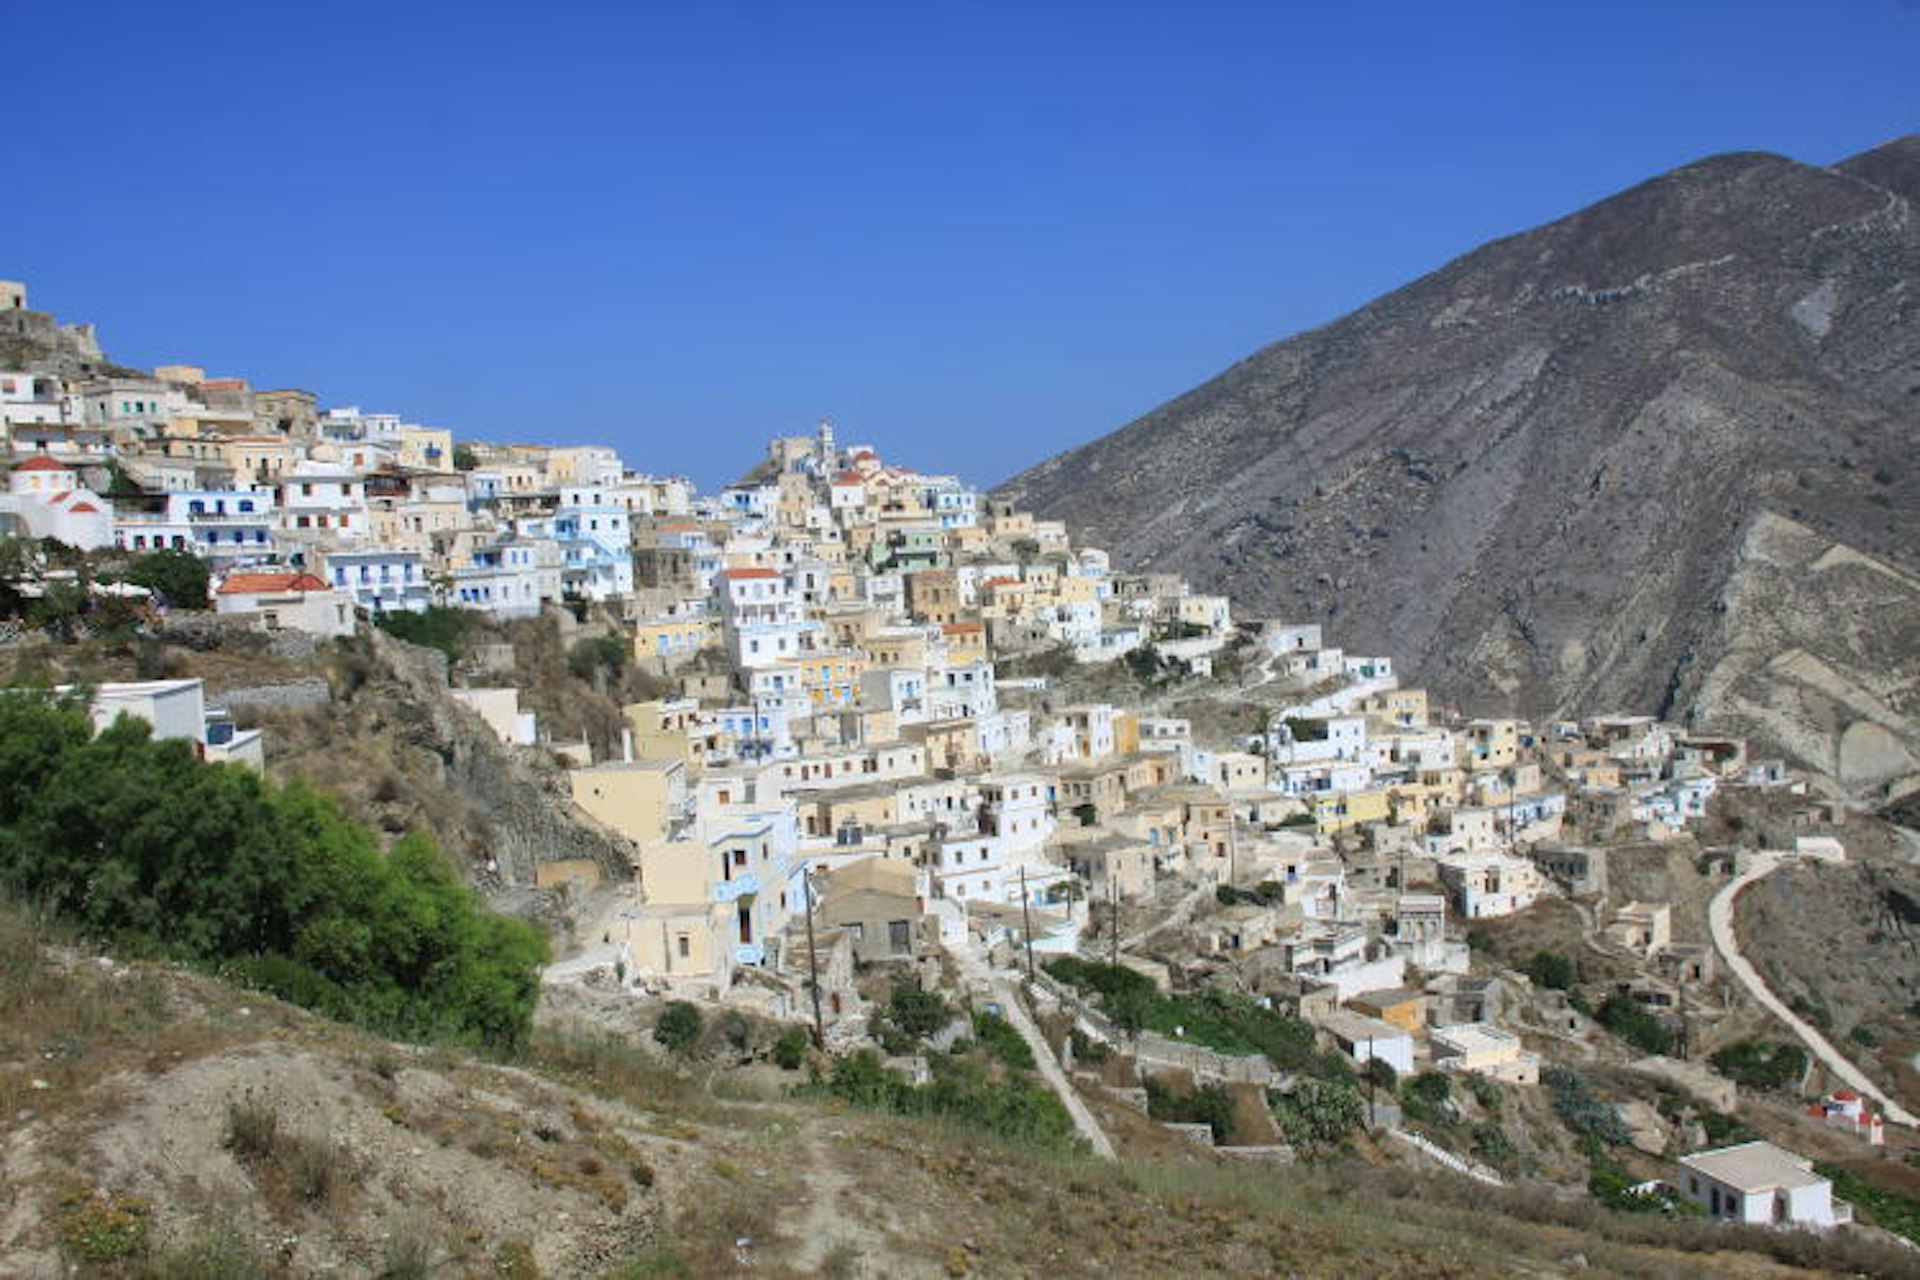 Remote Olymbos village on Karpathos island. Image by boaski / CC BY-SA 2.0